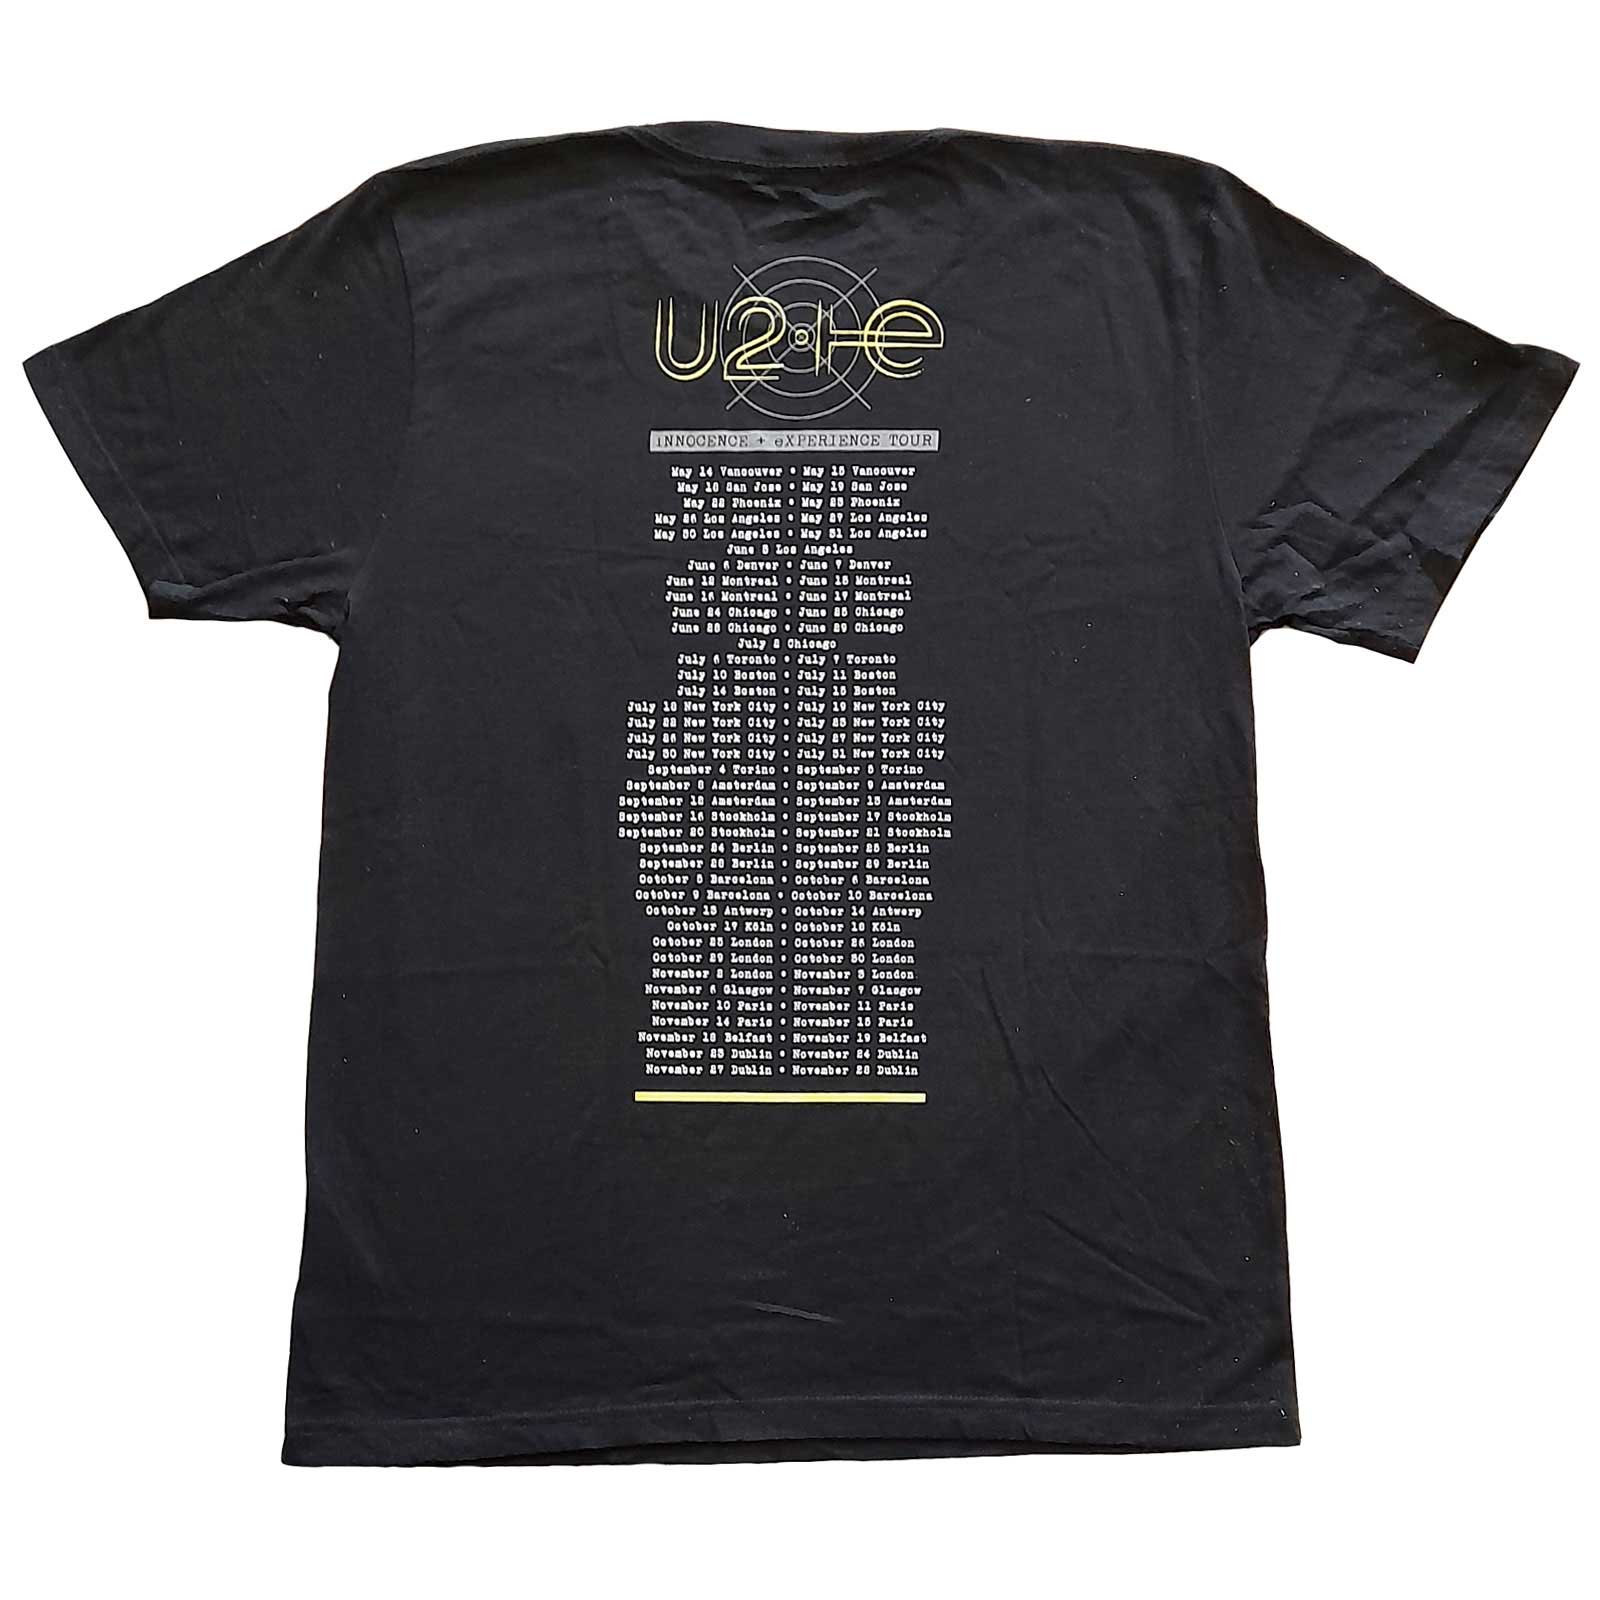 U2 T-Shirt - Innocence + Experience Tour 2018 With Back Print (Unisex) bACK